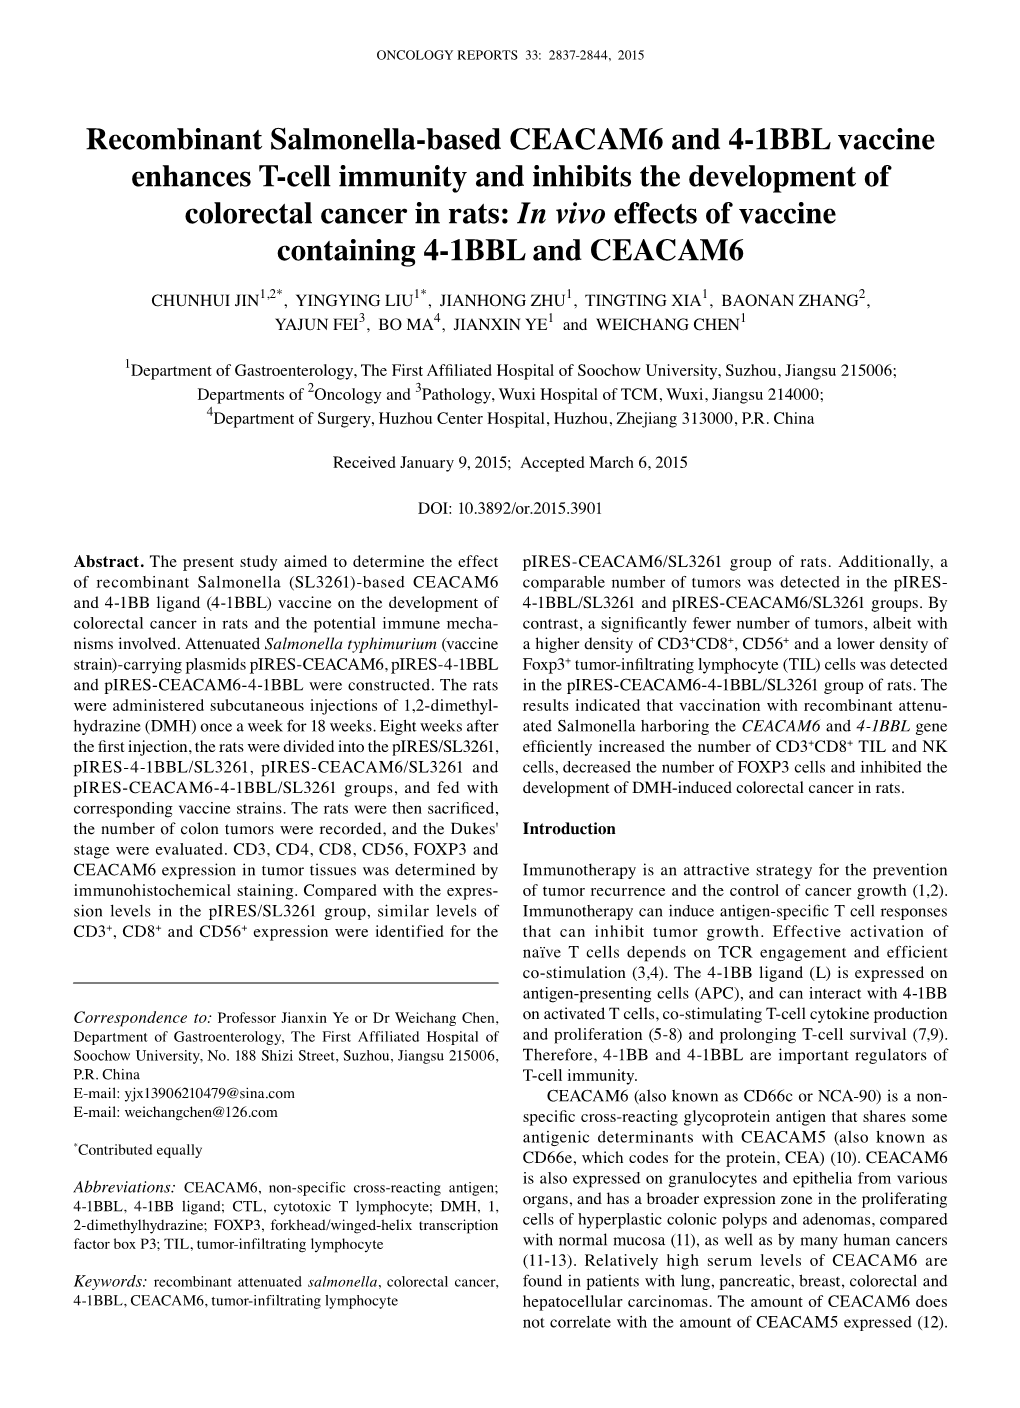 Recombinant Salmonella-Based CEACAM6 and 4-1BBL Vaccine